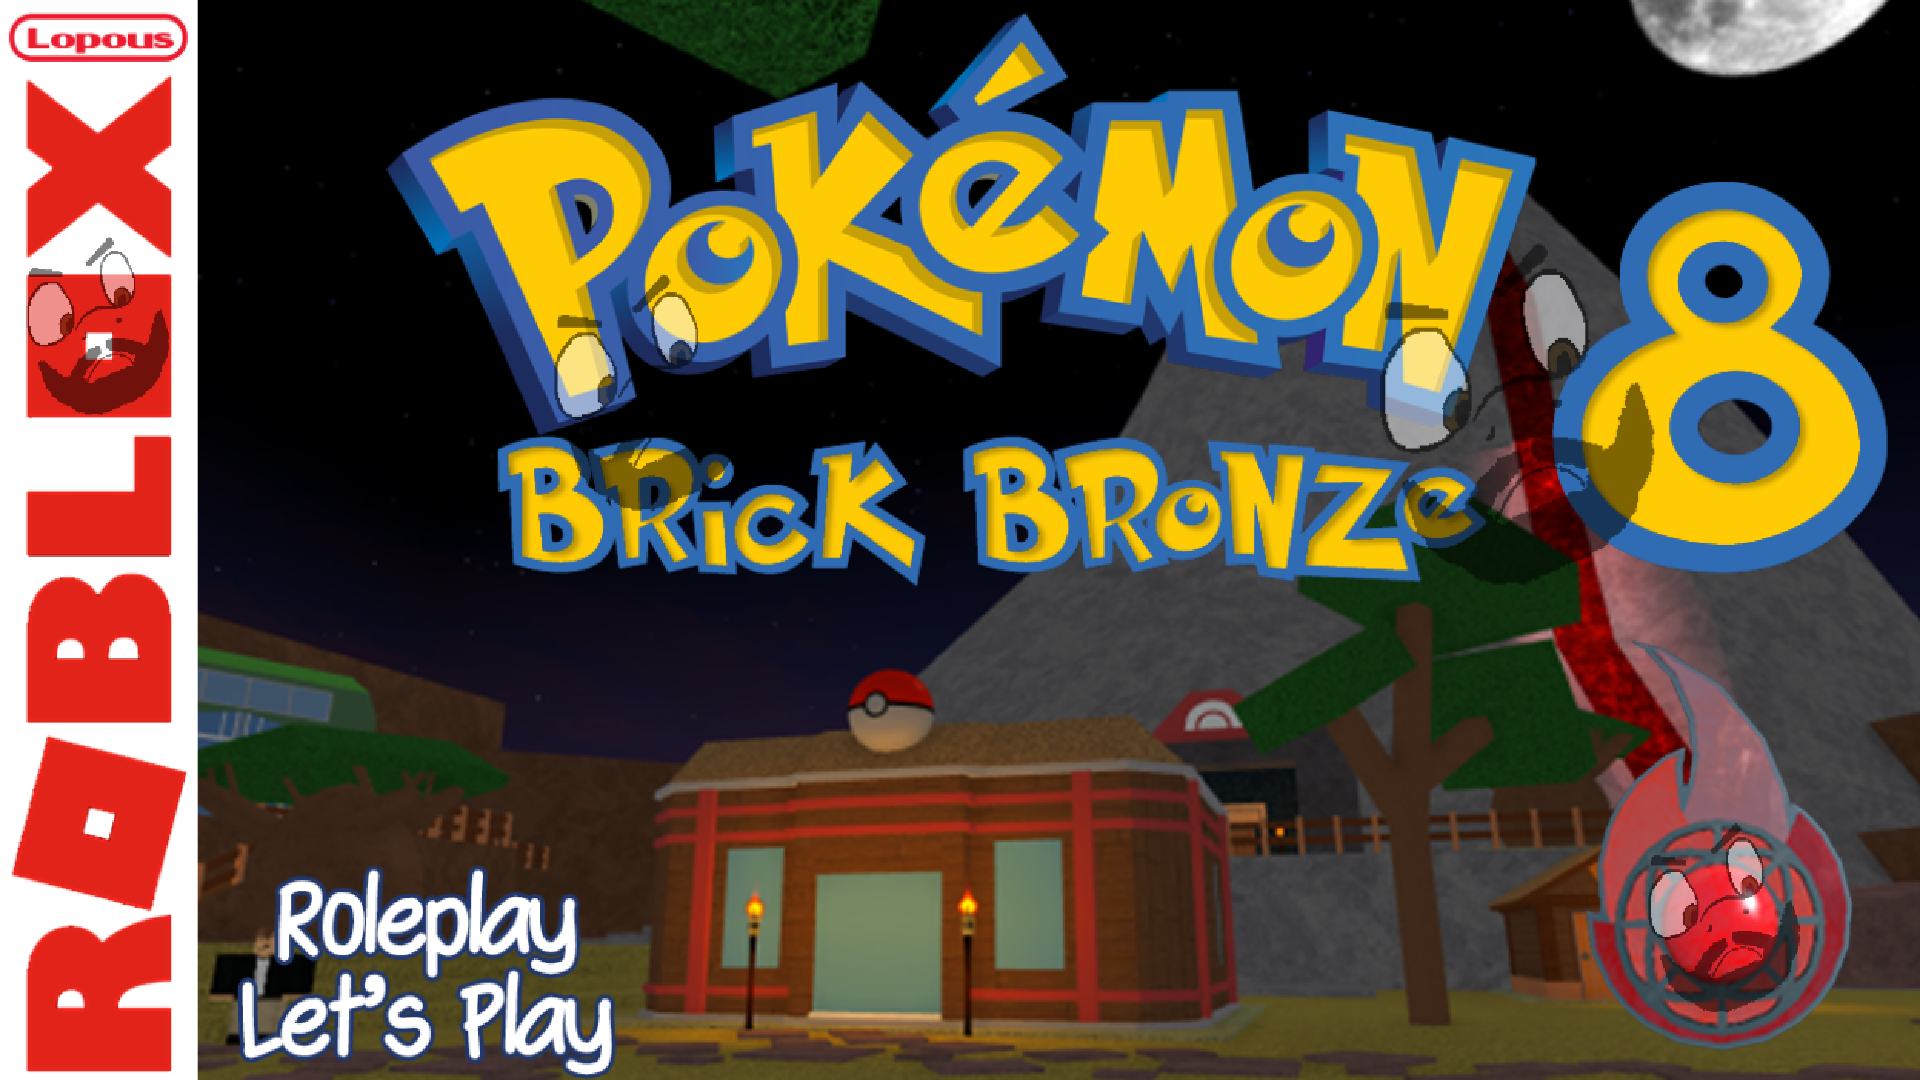 Pokemon Brick Bronze Episode 8  Thumbnail by Minocvi on DeviantArt